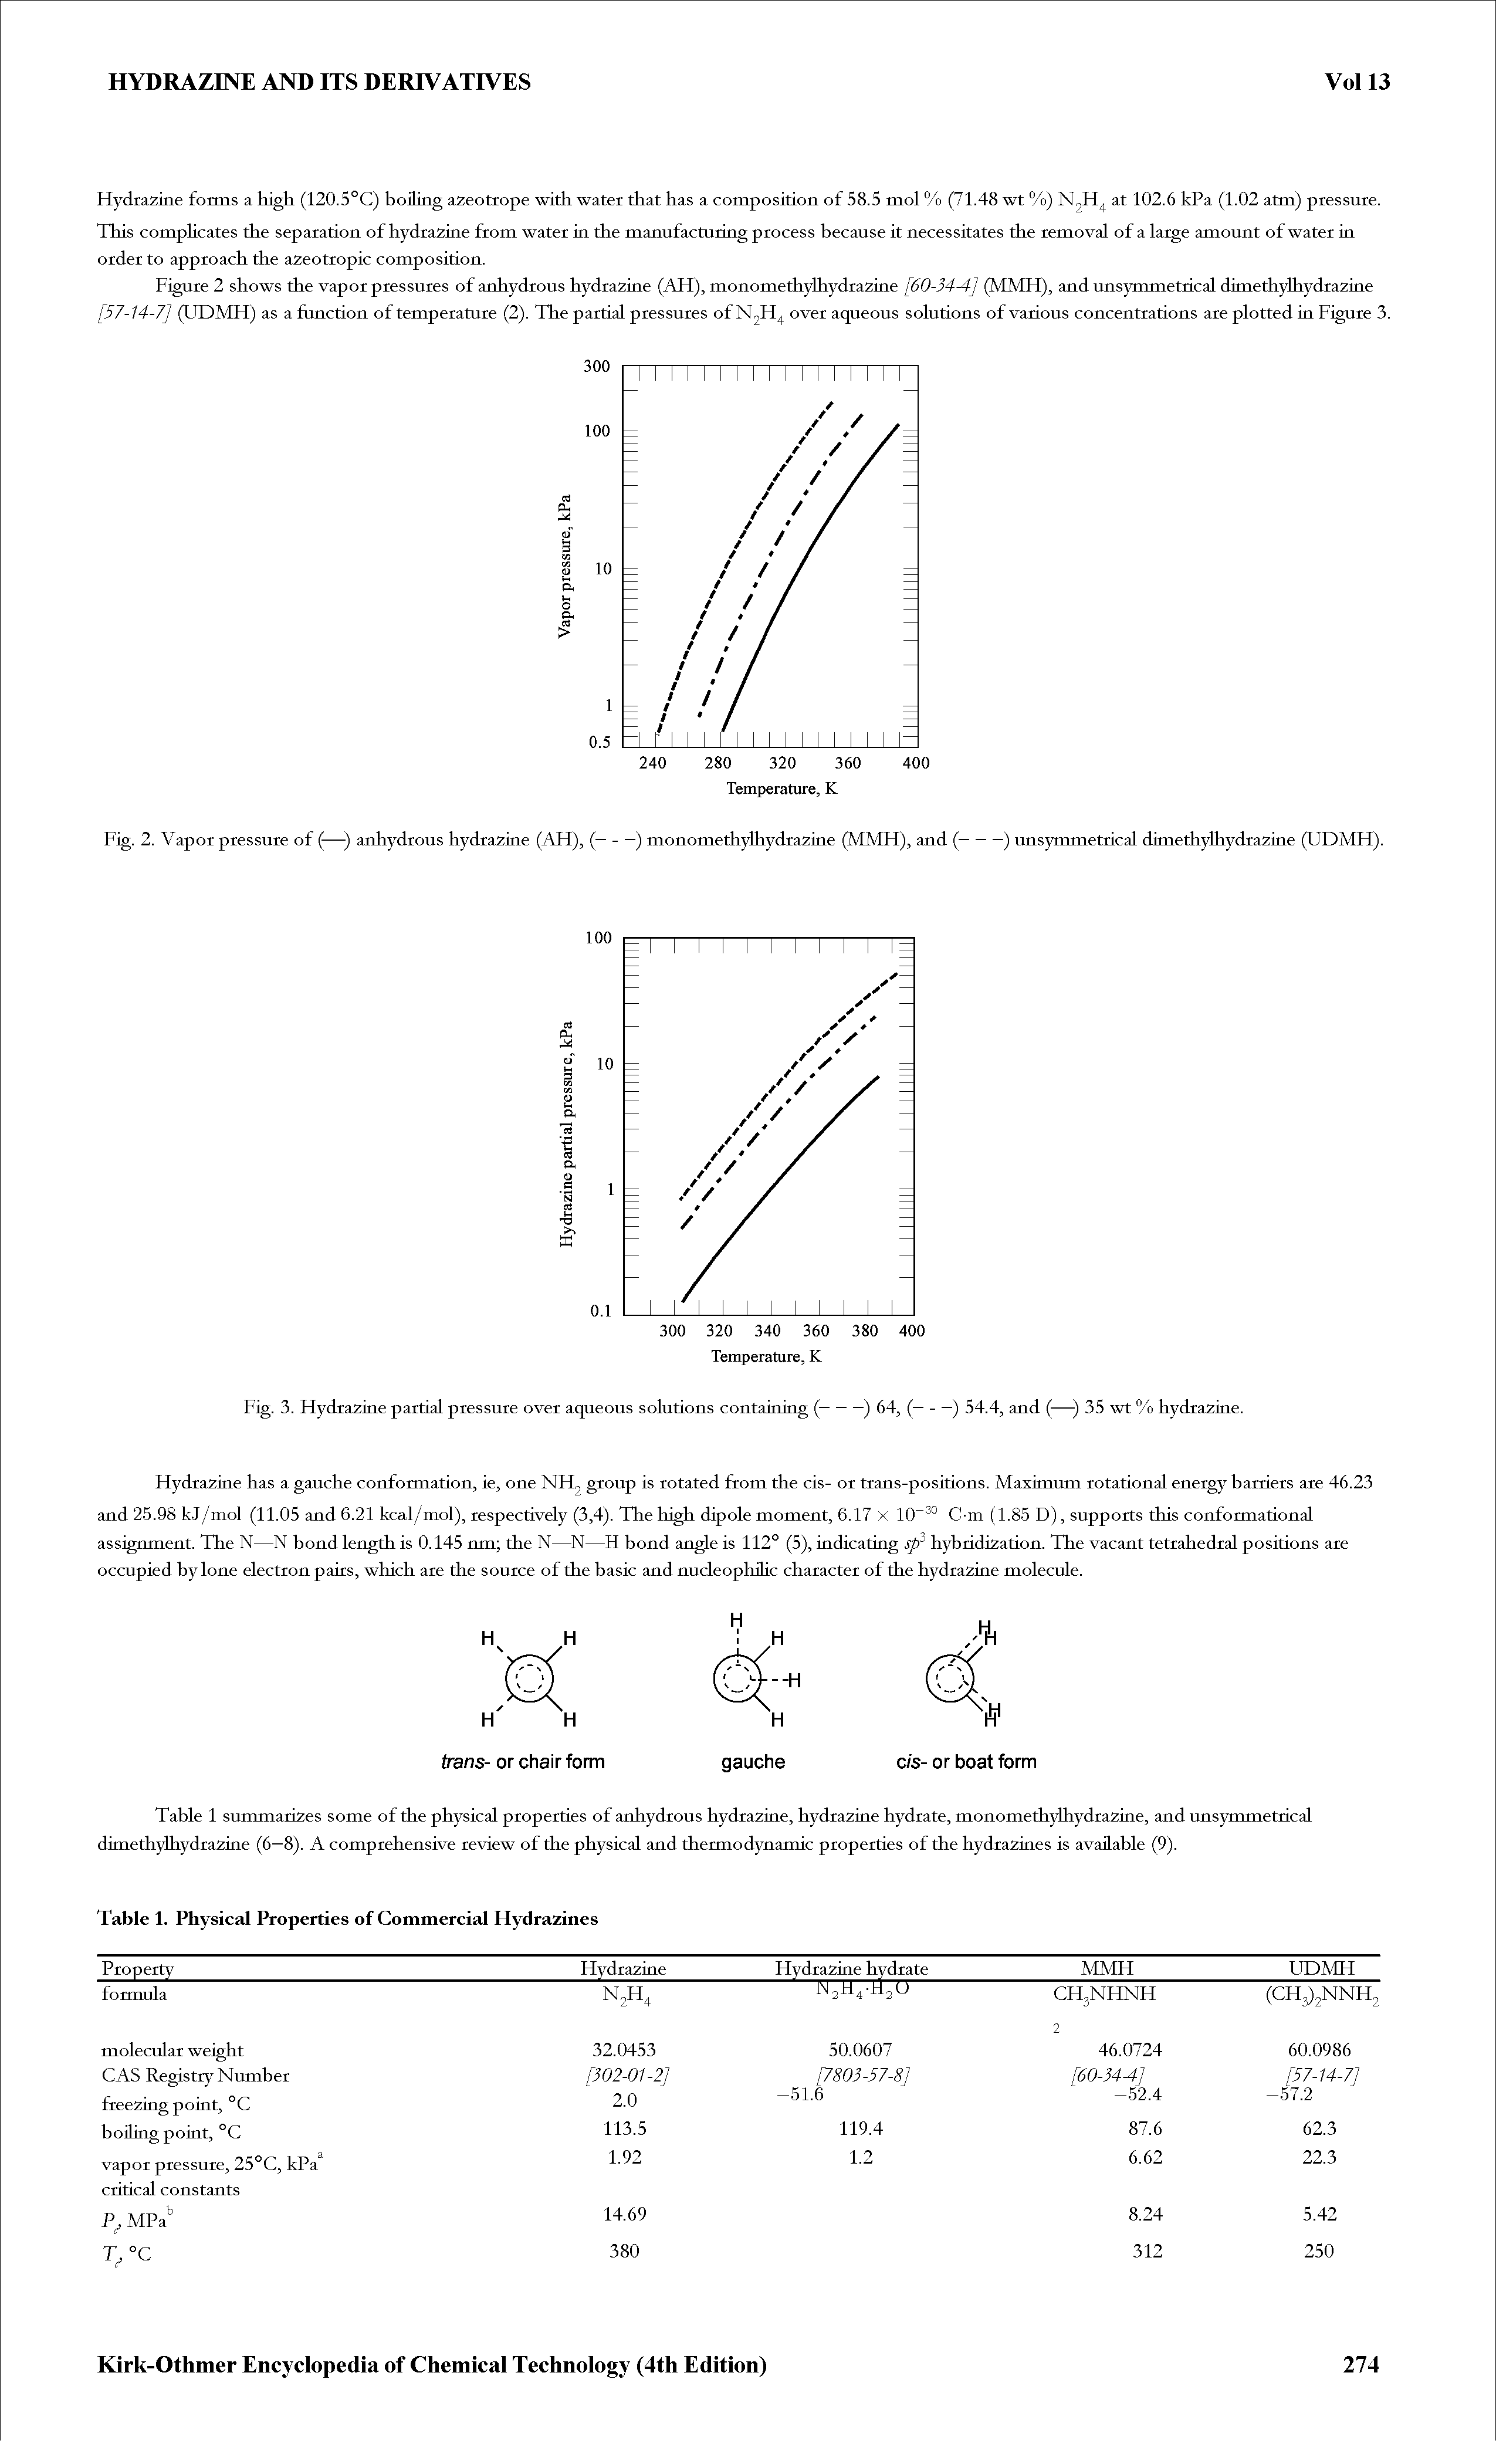 Fig. 2. Vapor pressure of (—) anhydrous hydrazine (AH), (— - —) monomethyUiydrazine (MMH), and (-) unsymmetrical dimethyUiydrazine (UDMH).